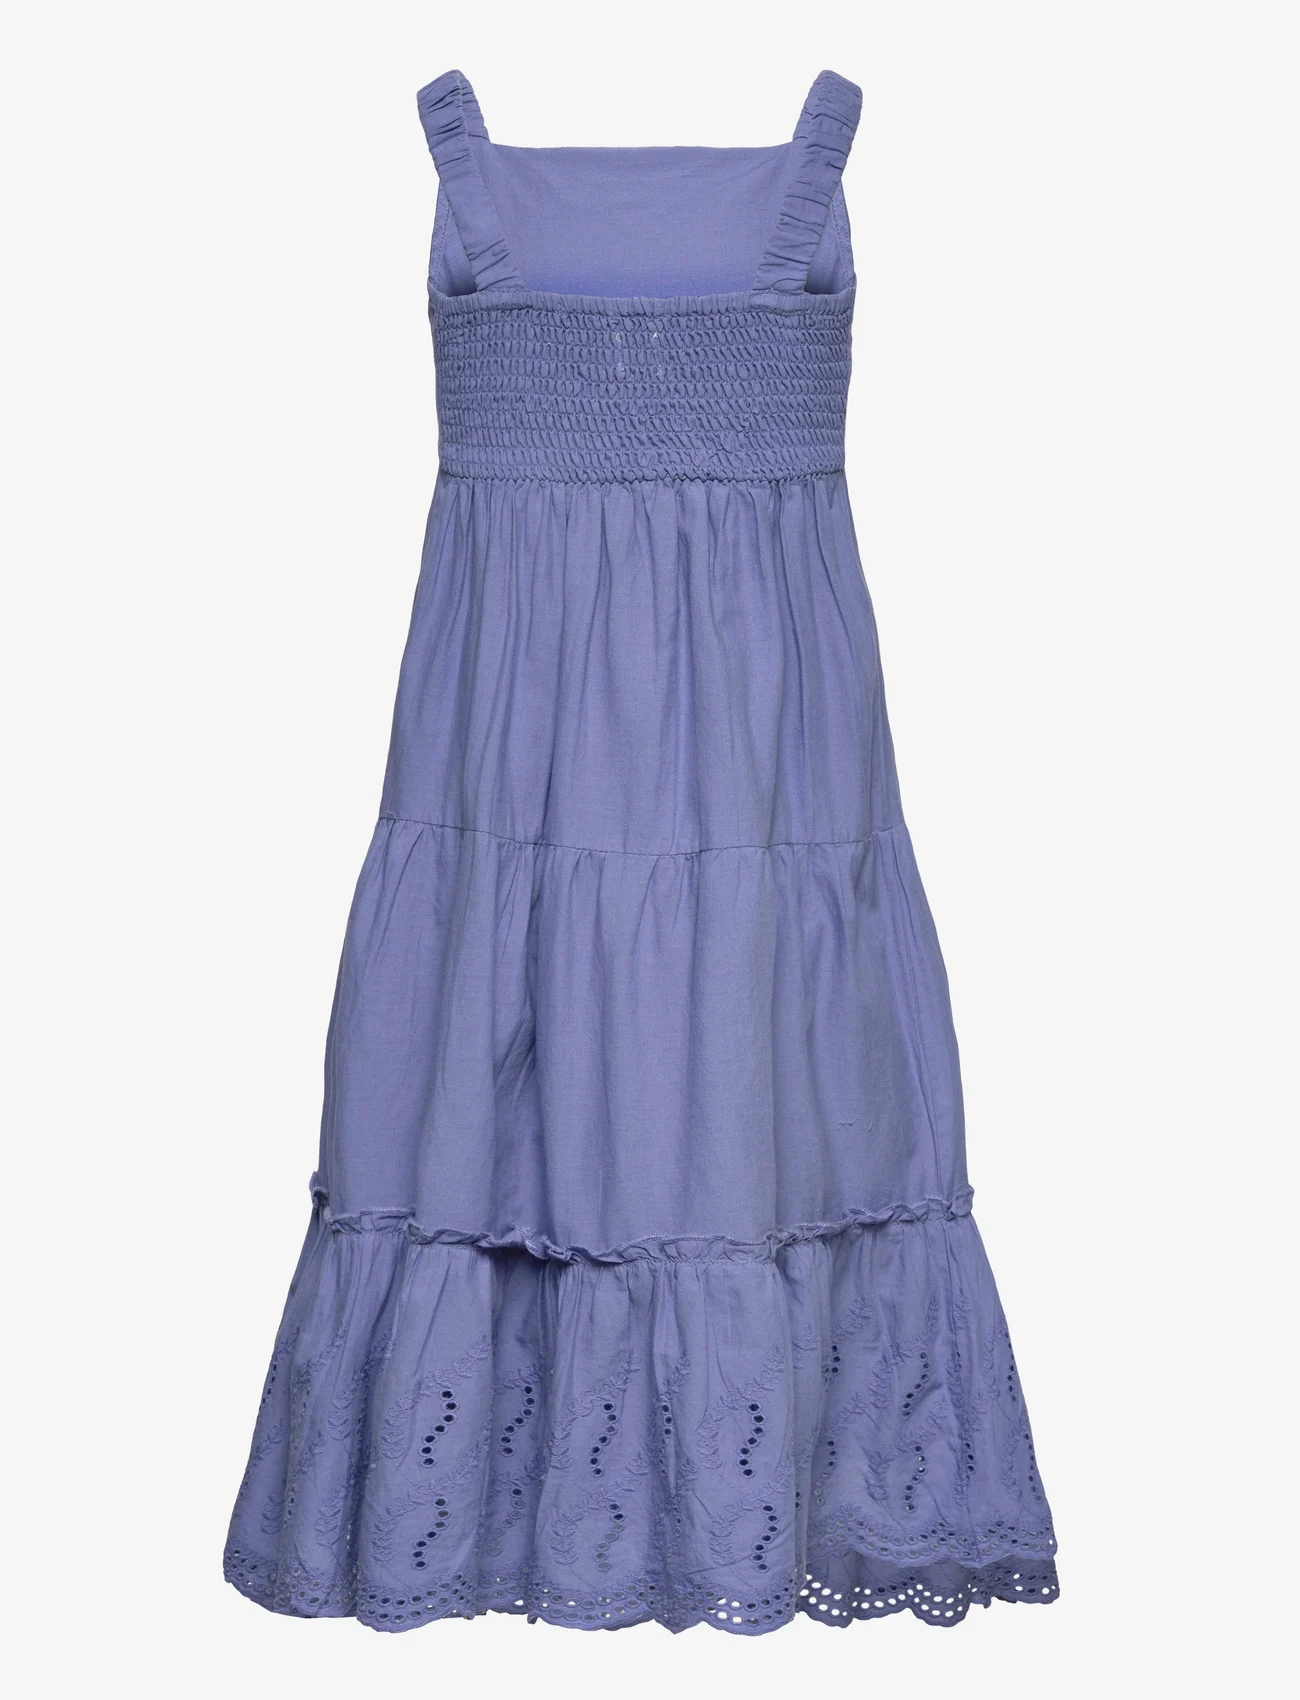 Creamie - Dress Embroidery - Ärmellose freizeitkleider - colony blue - 0